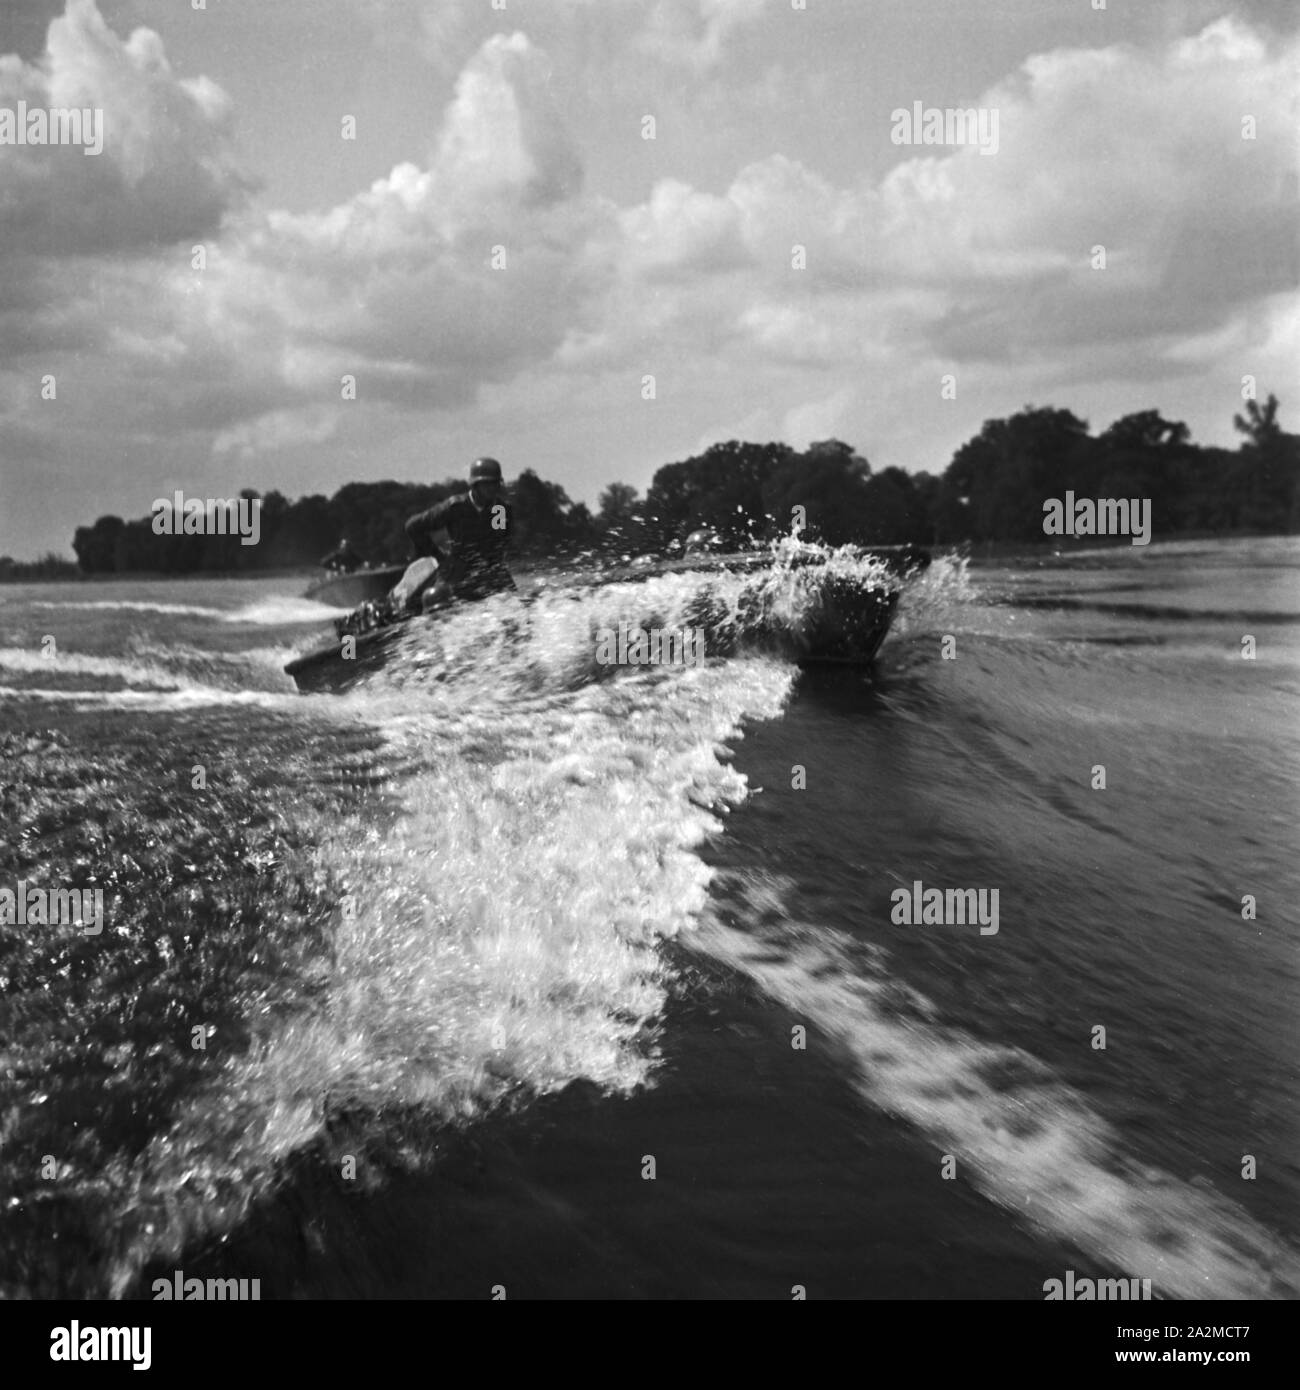 Bildunterschrift : Sturmboot- original en überquert höchster Geschwindigkeit einen Fluß, Deutschland 1940er Jahre. Bateau d'assaut traversant une rivière avec une vitesse élevée, l'Allemagne des années 40. Banque D'Images